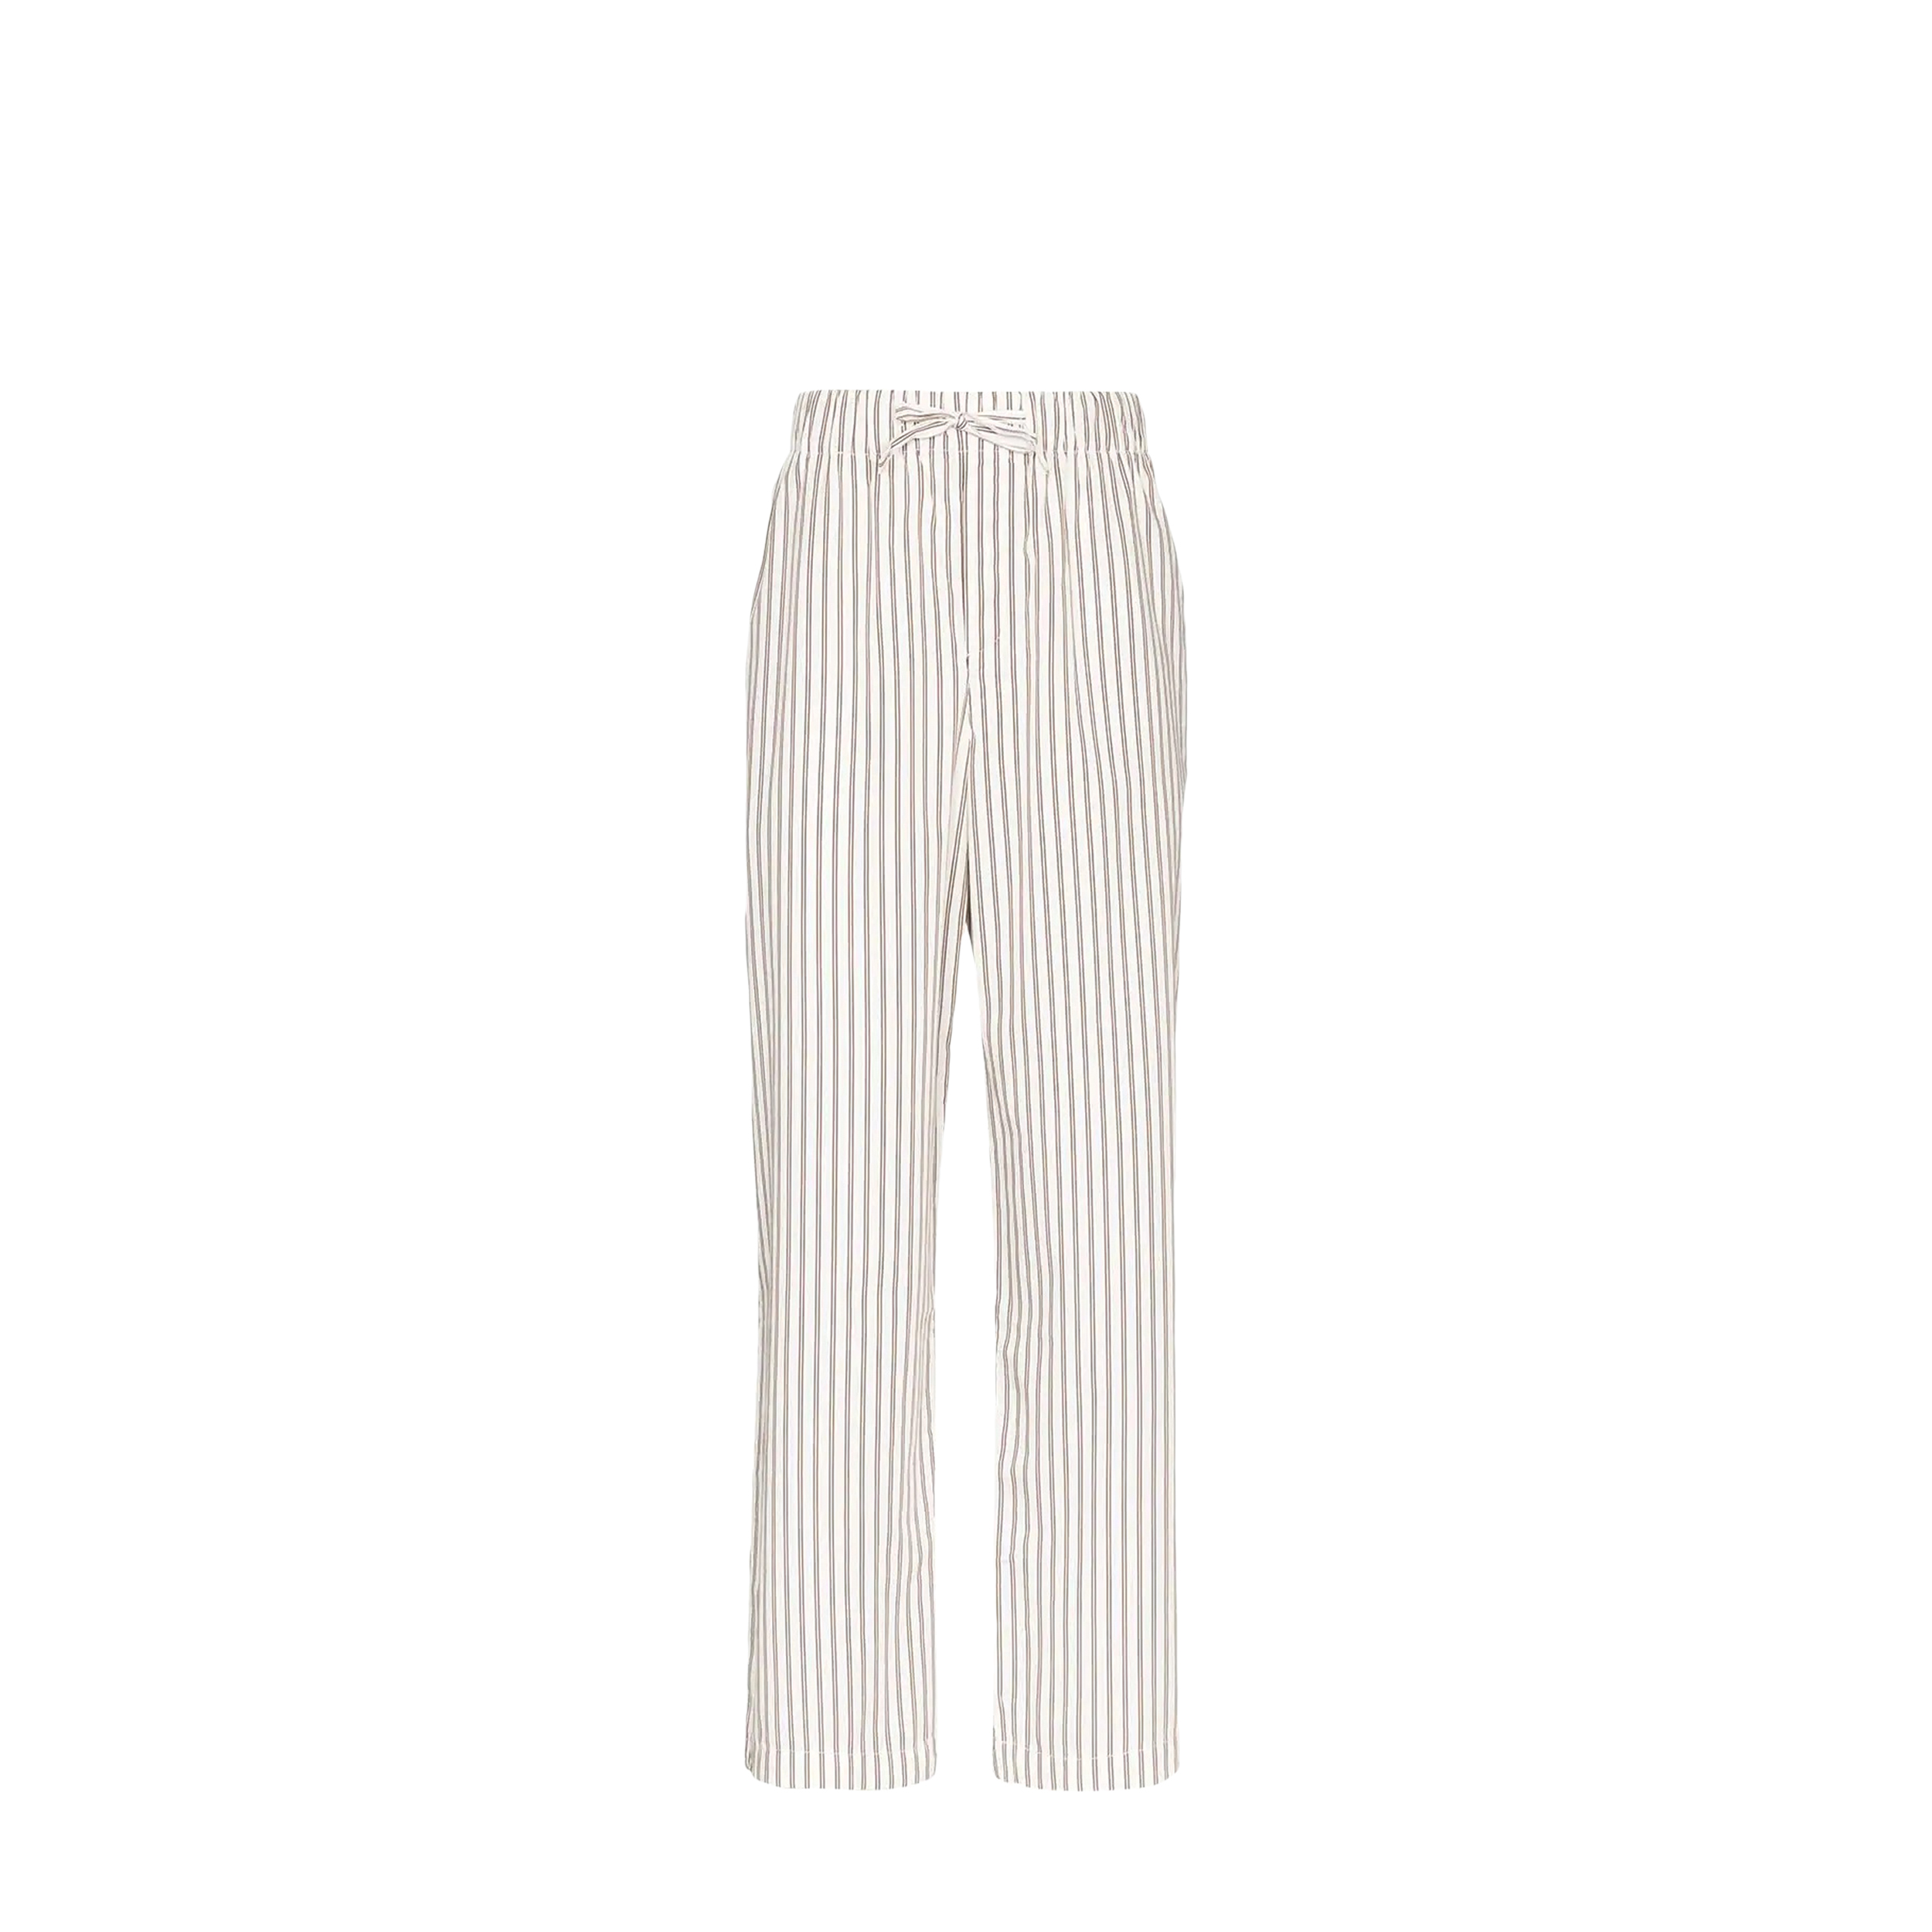 Tekla Tekla Poplin Pyjamas Pants White & Brown Striped (S)